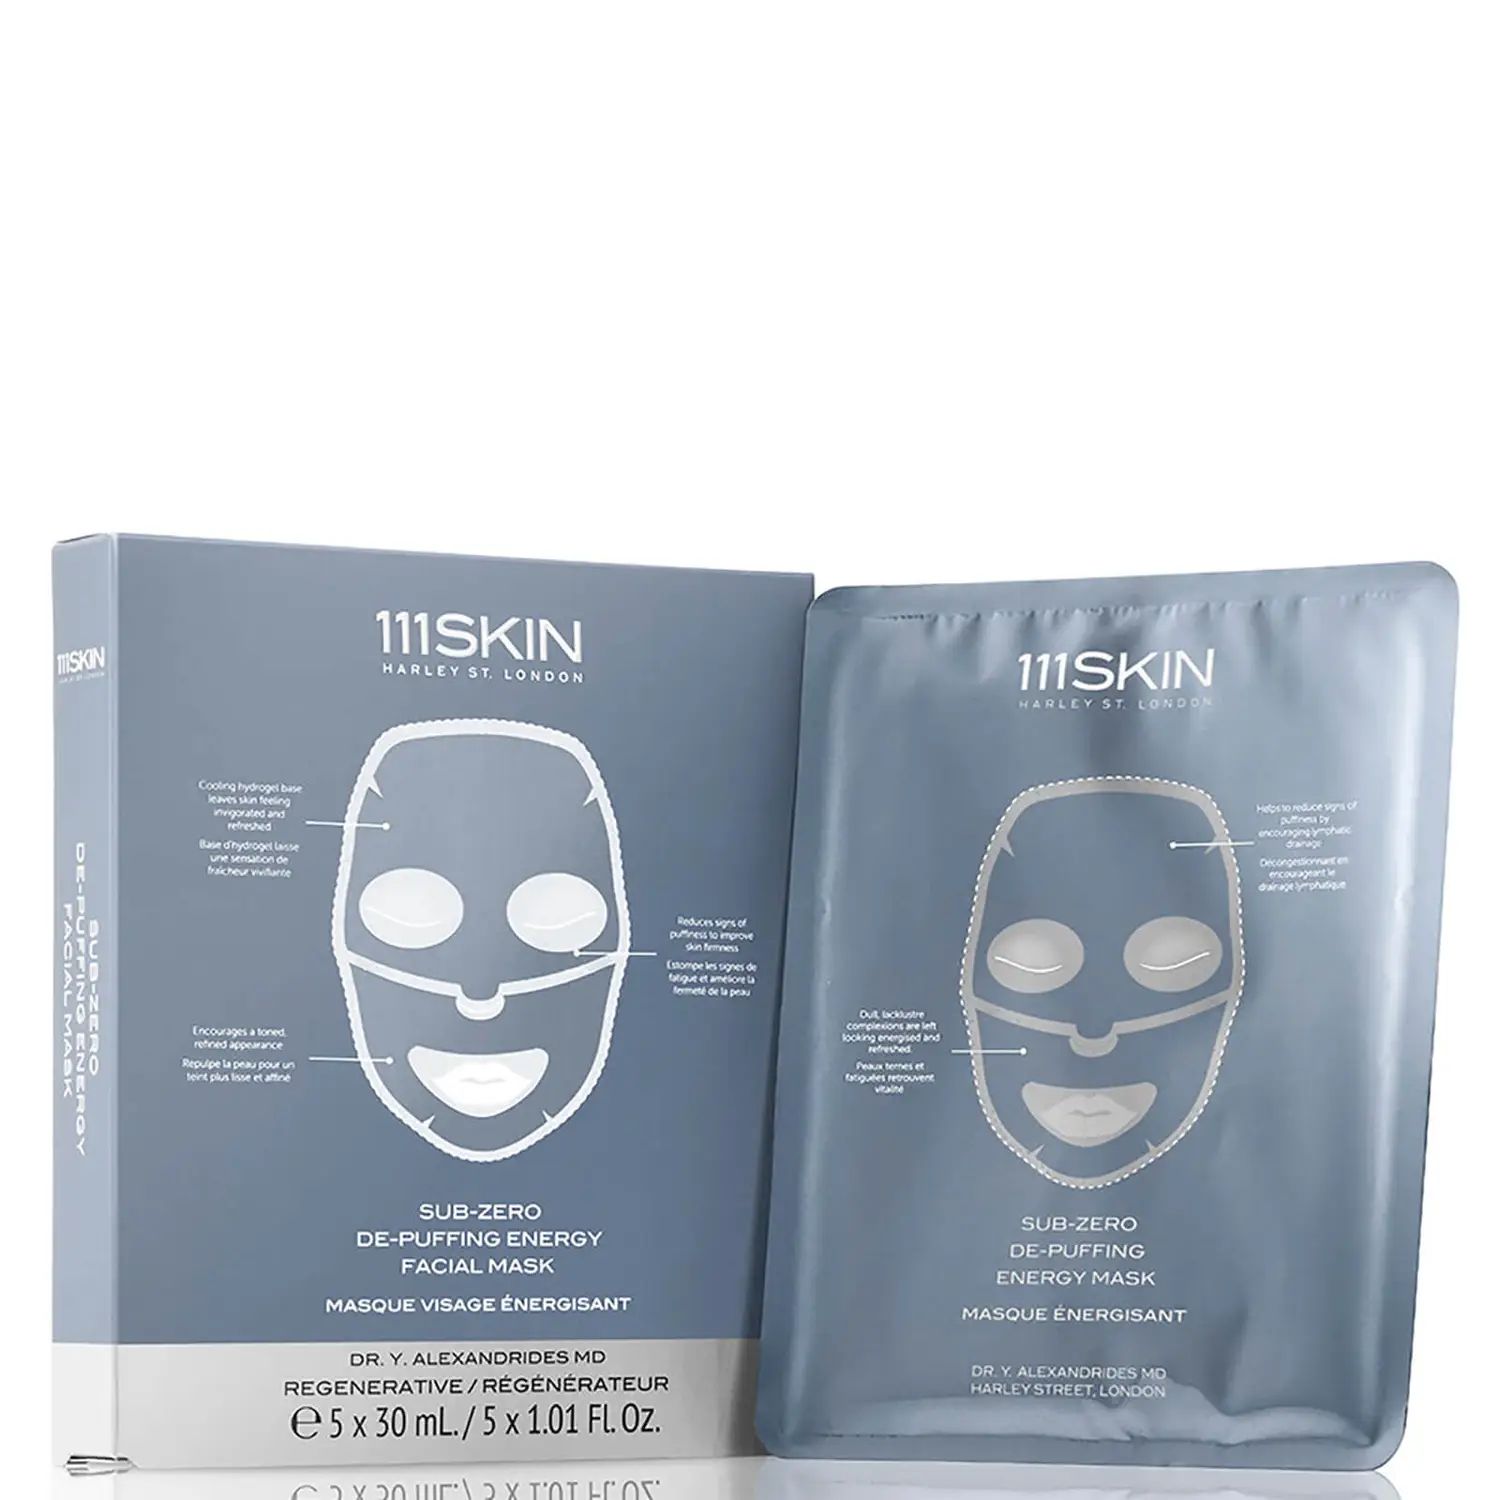 111SKIN Sub-Zero De-Puffing Energy Mask Box (5 count) | Dermstore